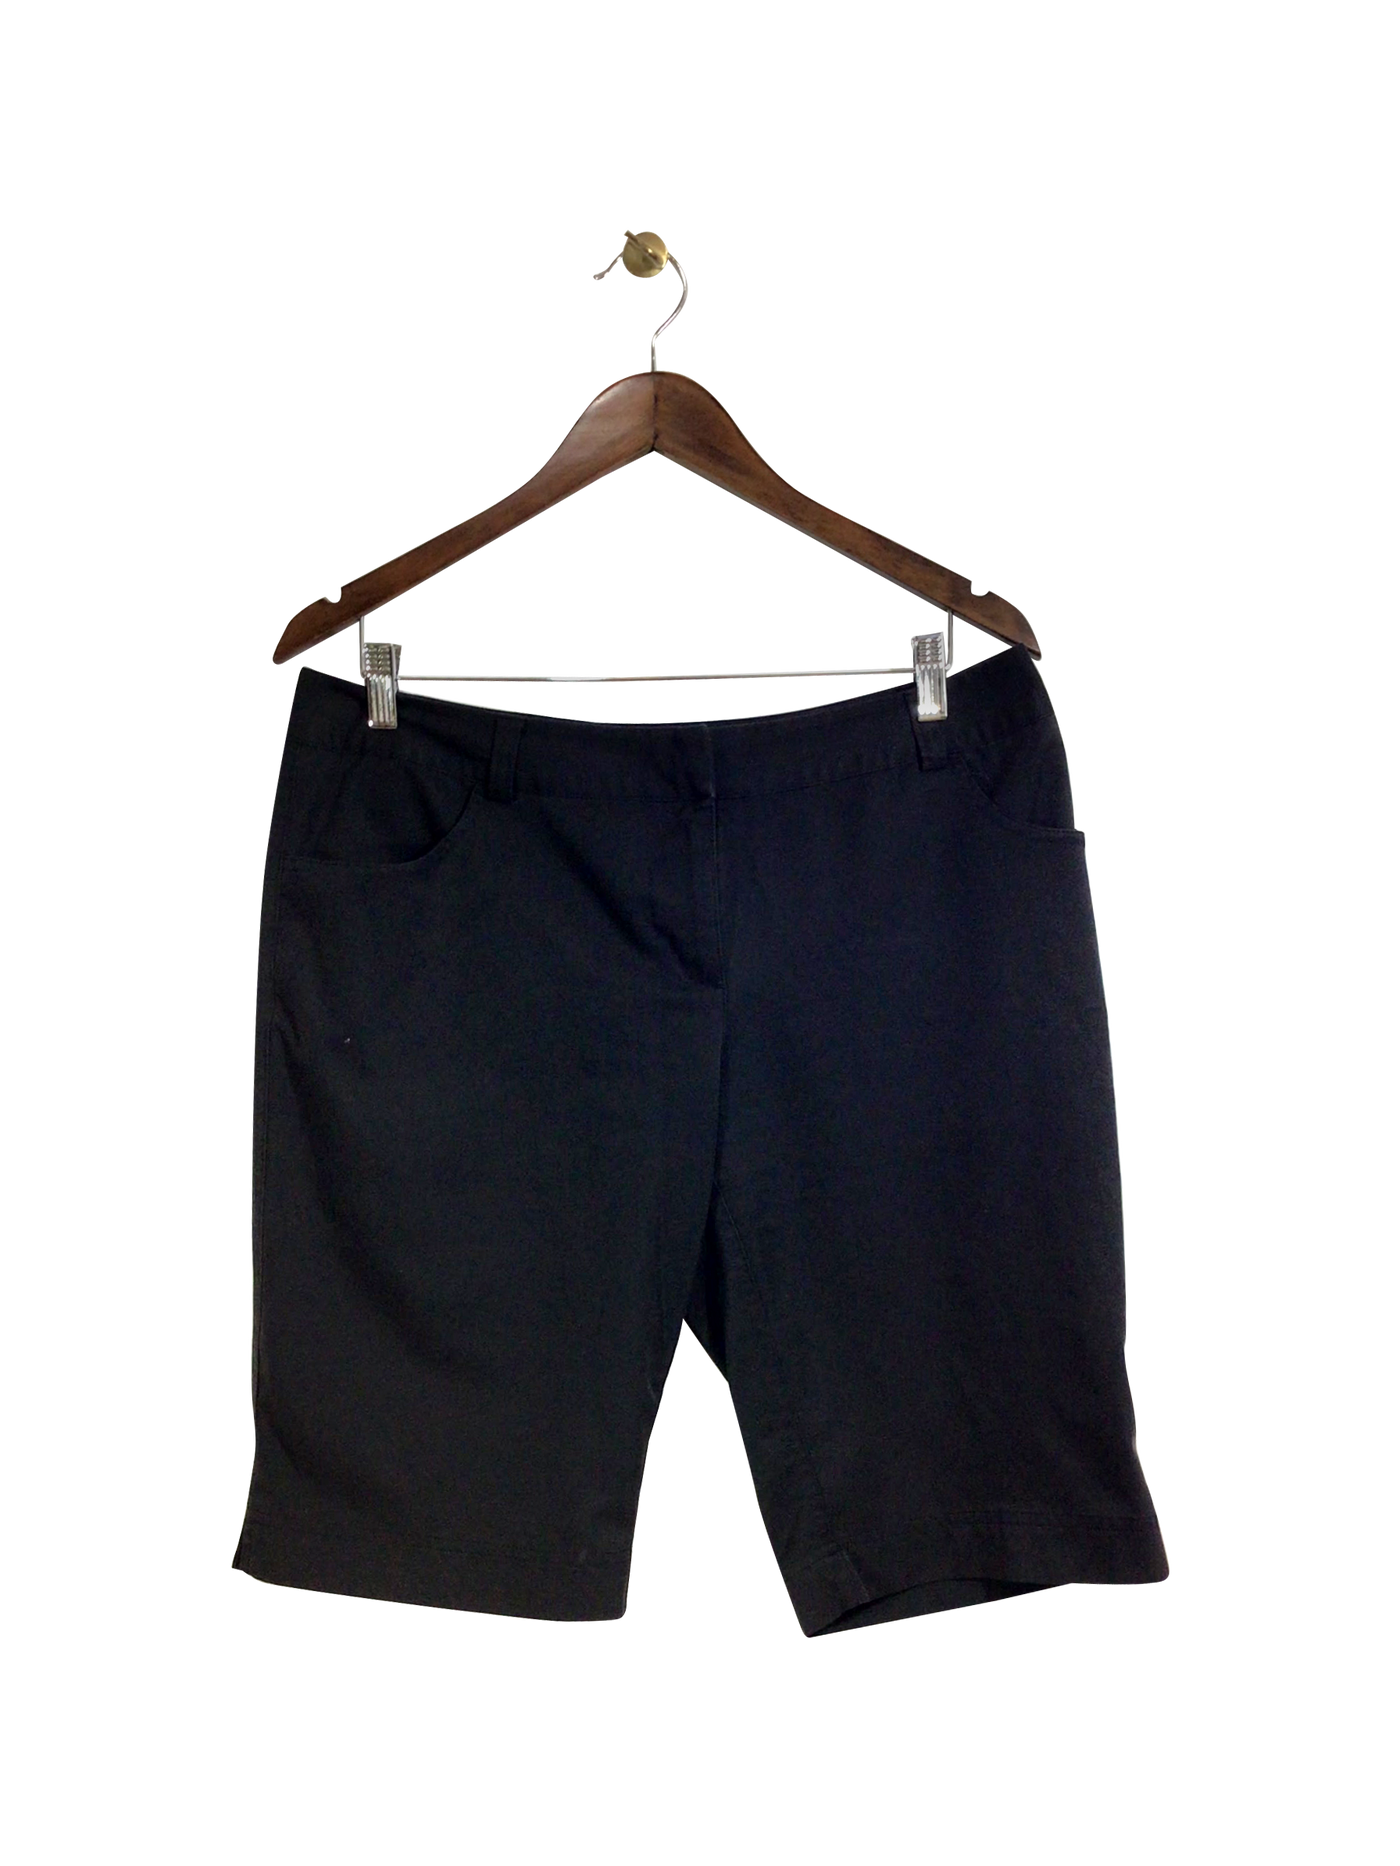 ADIDAS Pant Shorts Regular fit in Black - Size 10 | 15.99 $ KOOP